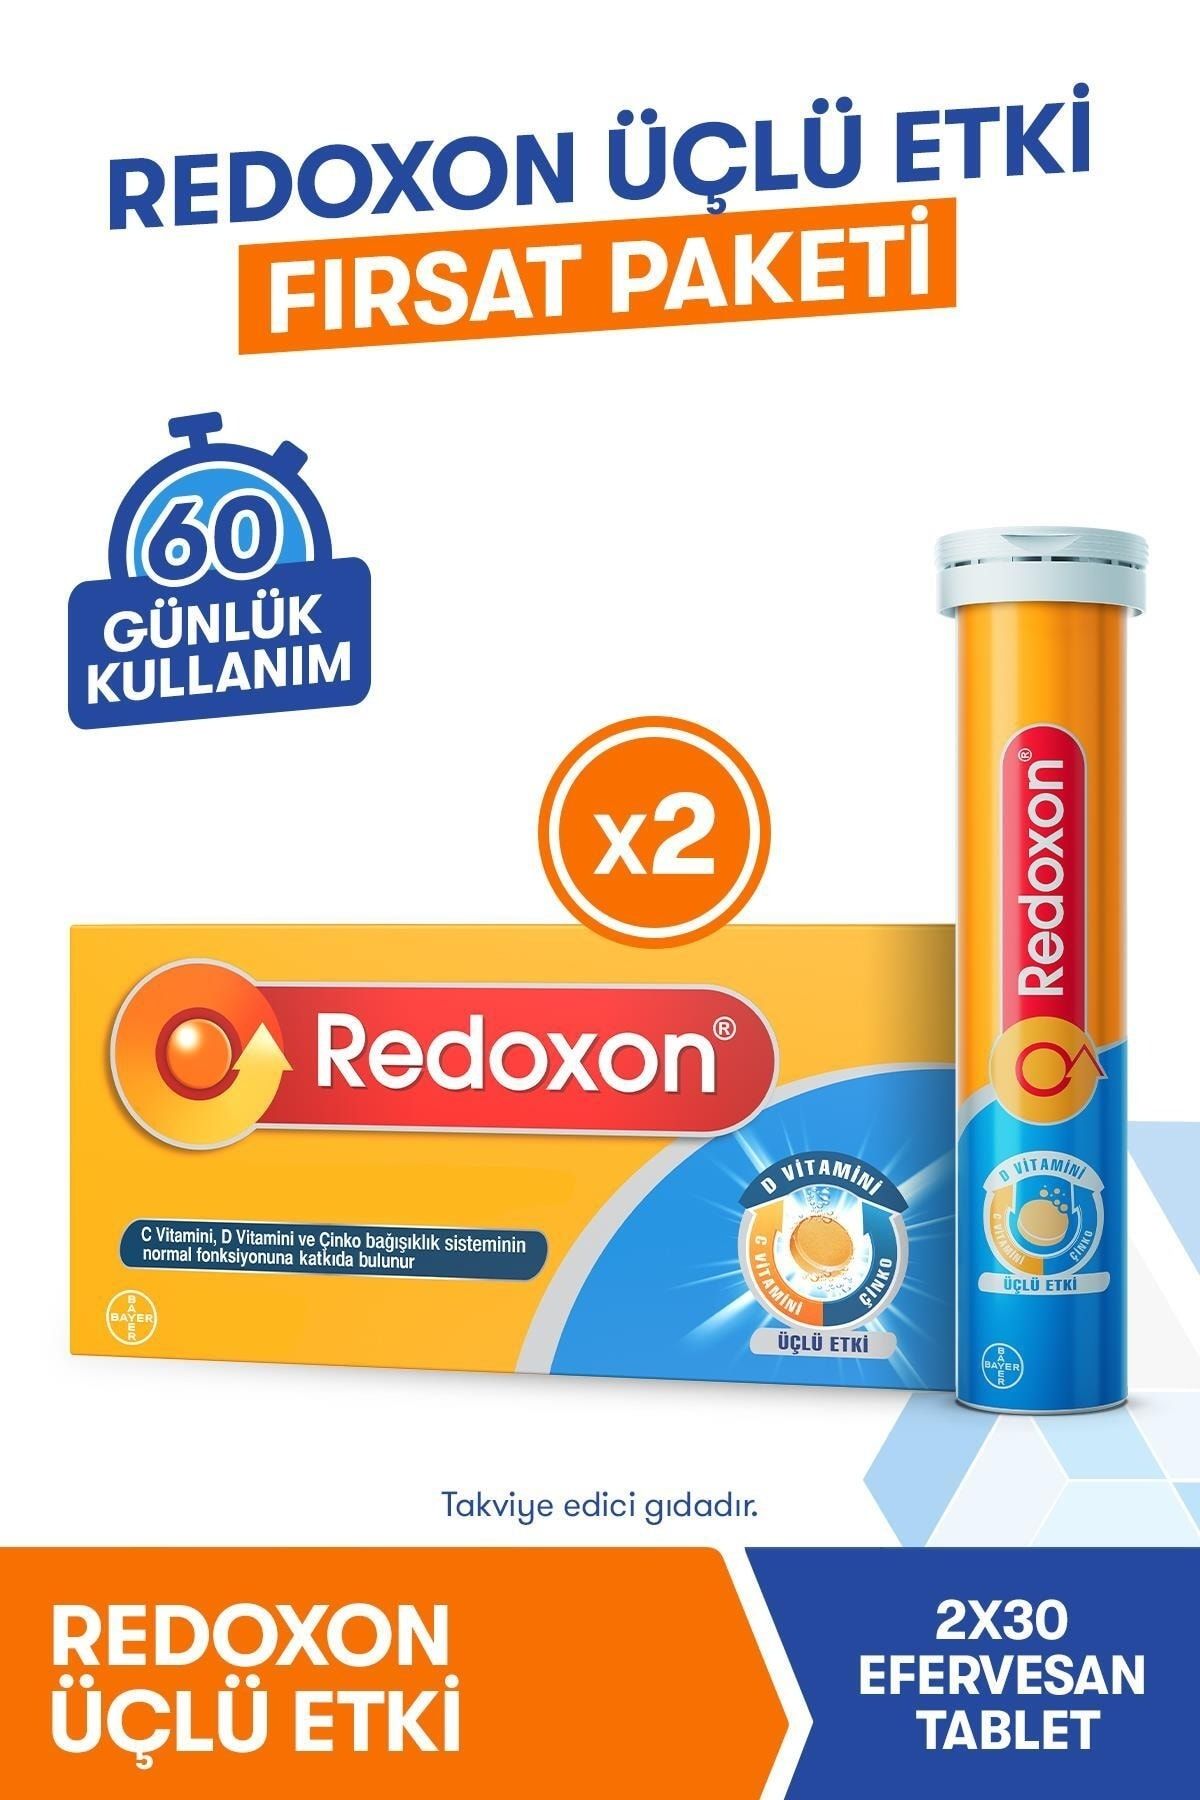 Redoxon Üçlü Etki 2x30 Efervesan Tablet (fırsat Paketi) I 1000 Mg C Vitamini, D Vitamini Ve Çinko Iç